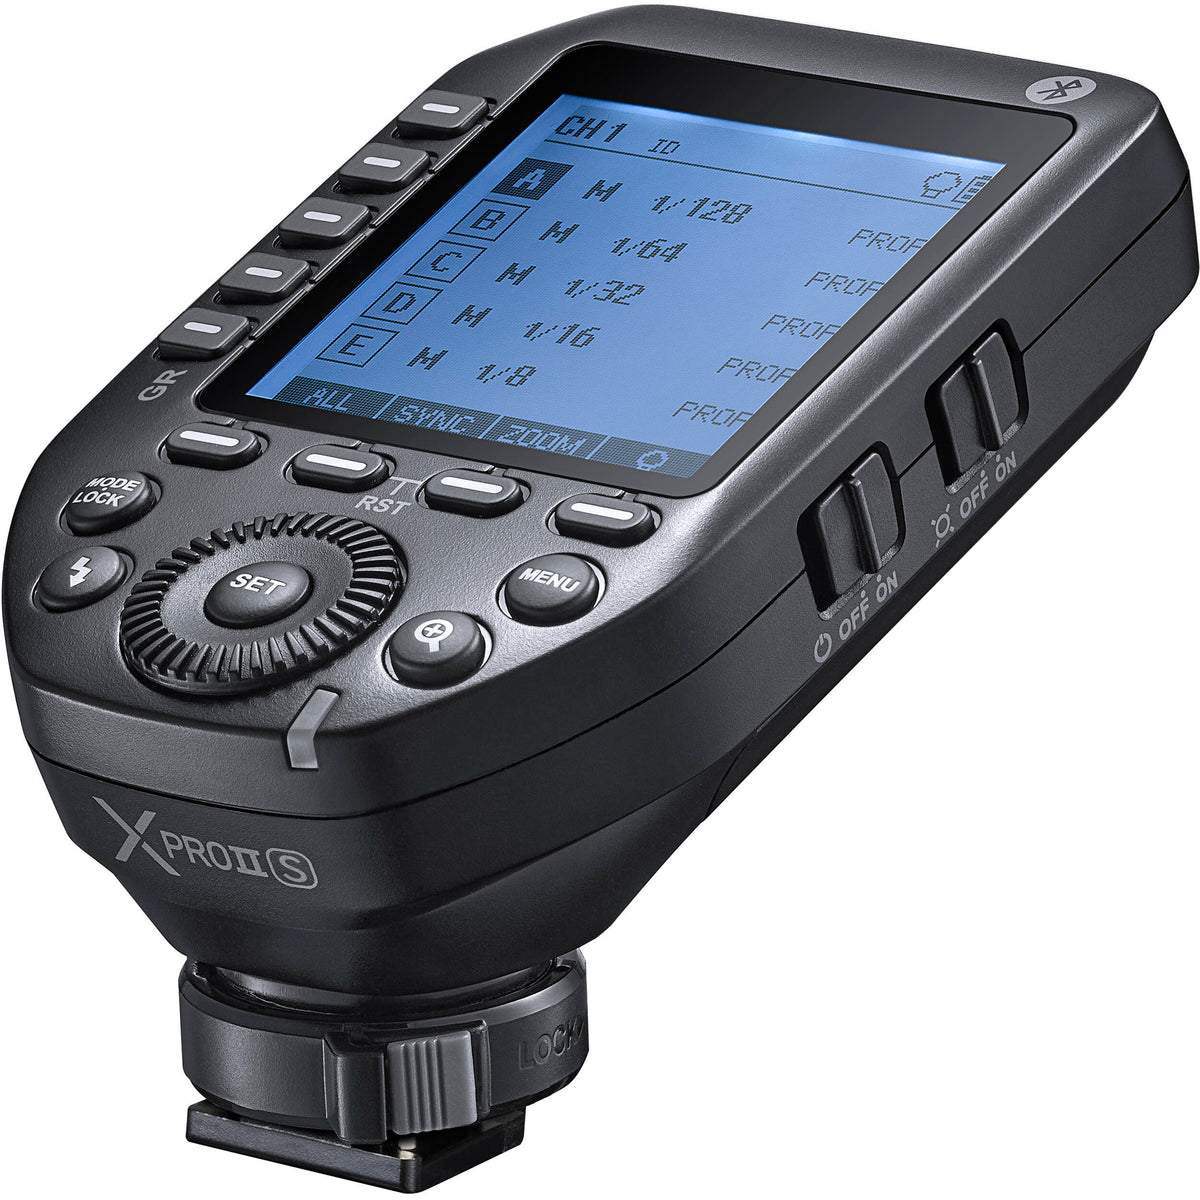 Godox XPro ii Sony Wireless Flash Trigger for Sony Cameras